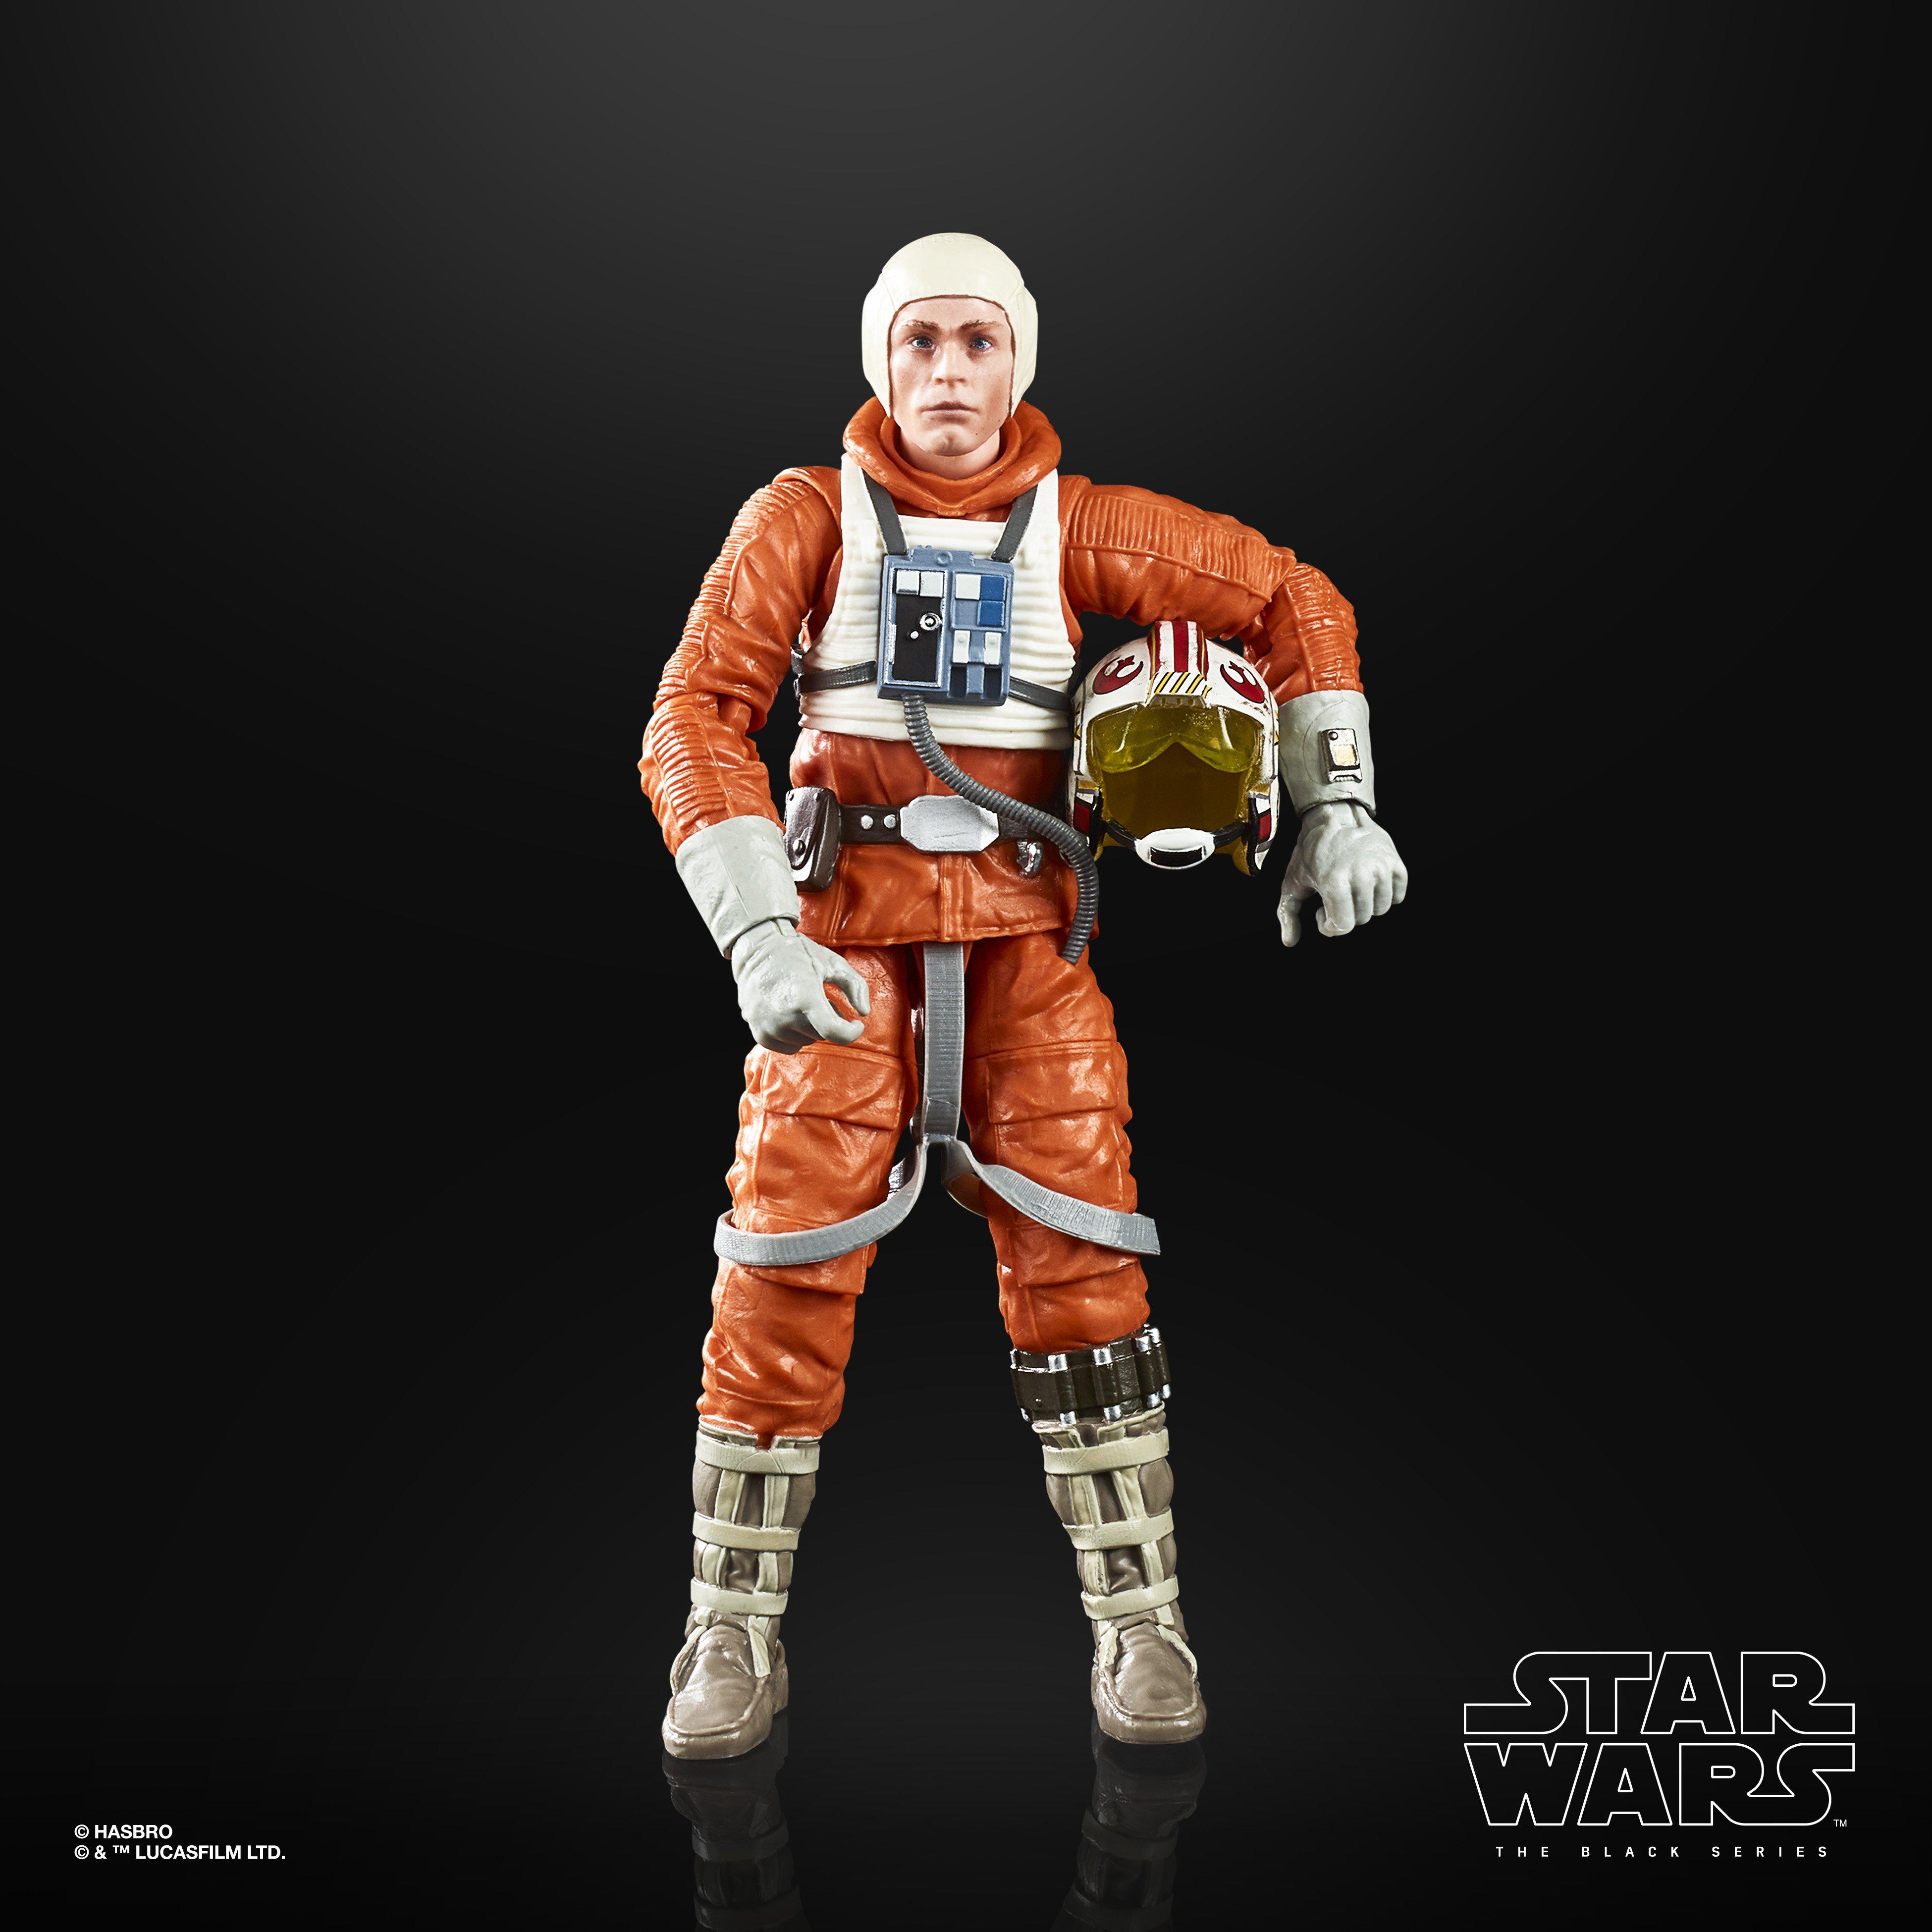 Hasbro Star Wars: The Empire Strikes Back 40th Anniversary Luke Skywalker Snowspeeder 6-in Action Figure